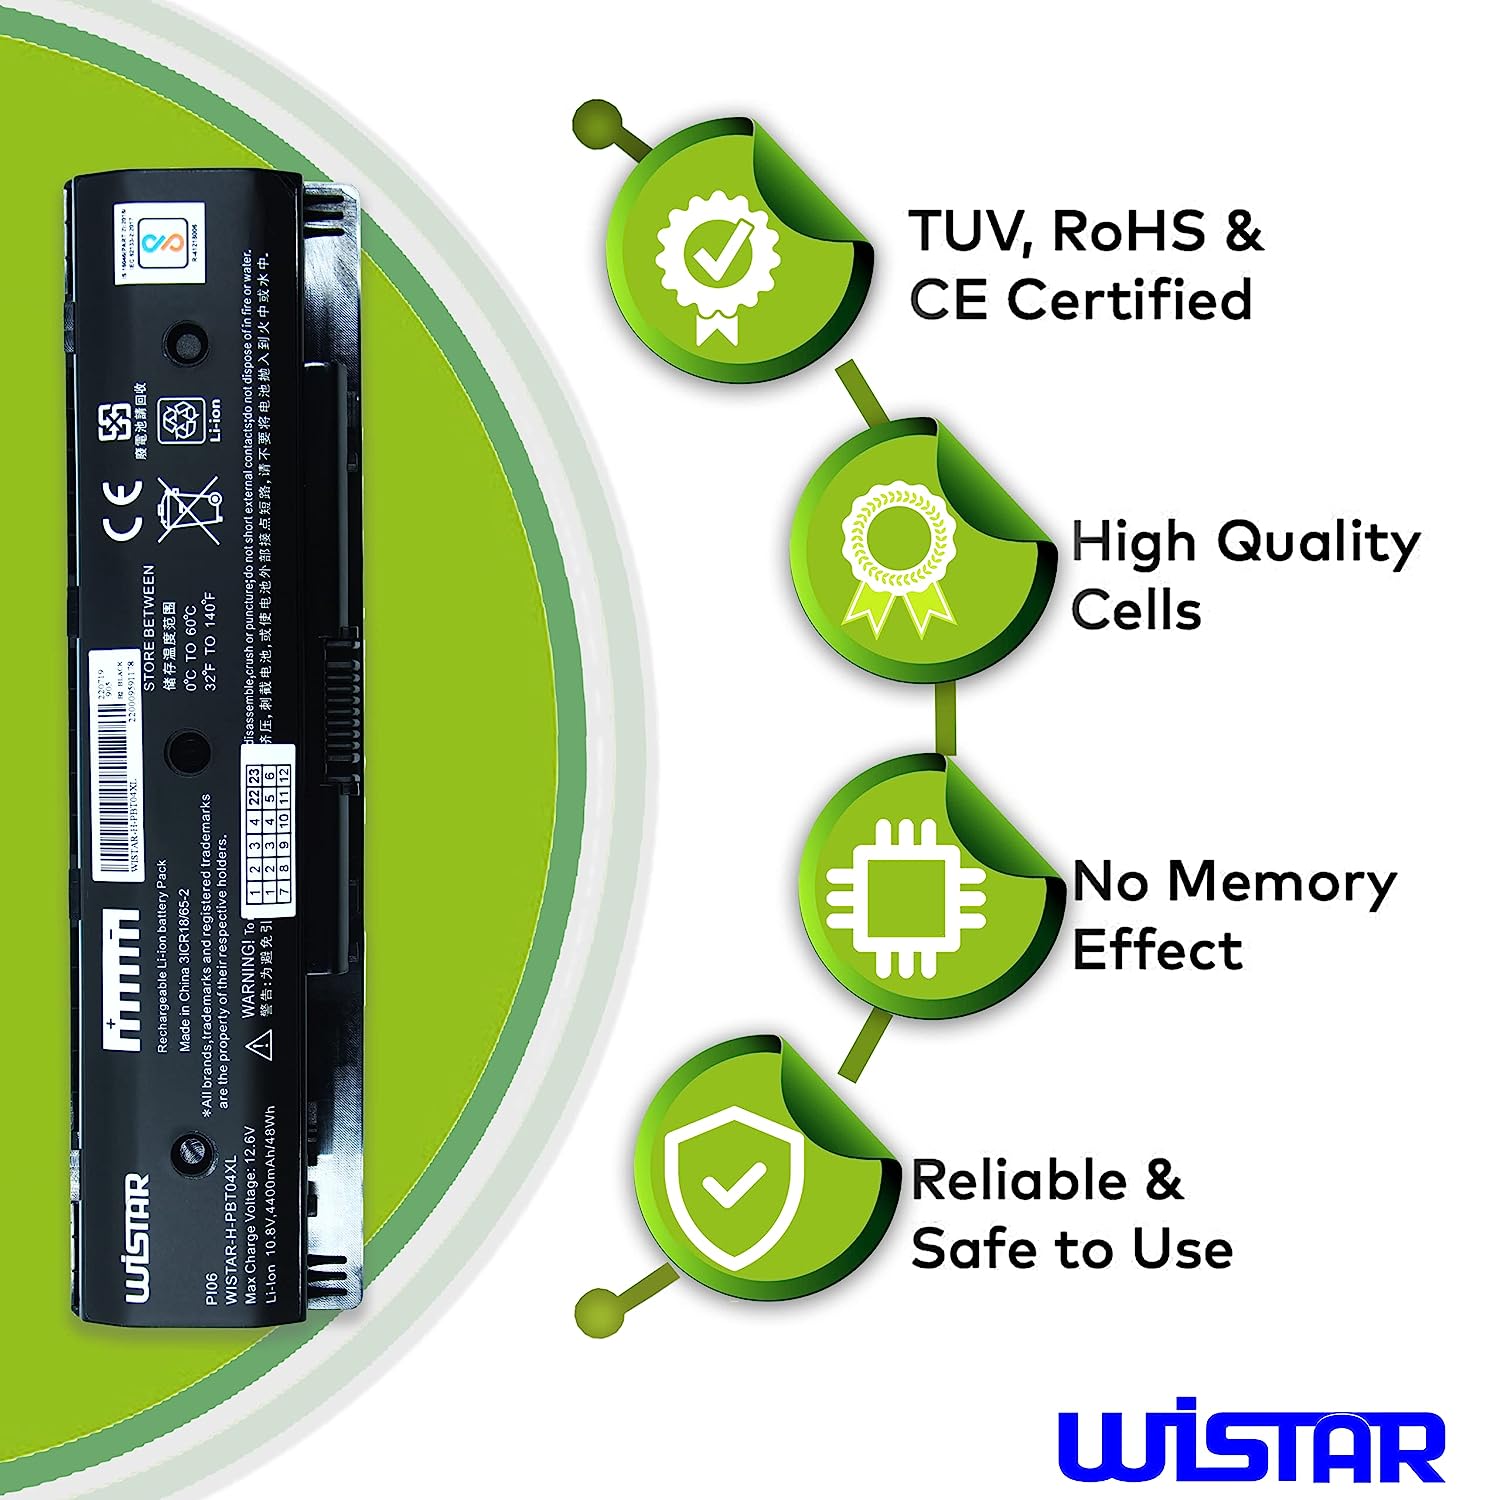 WISTAR H6L38AA PI06 Laptop Battery Compatible for HP Pavilion 15-E013NR, 15-E013TX, 15-E014NR, 15-E015NR